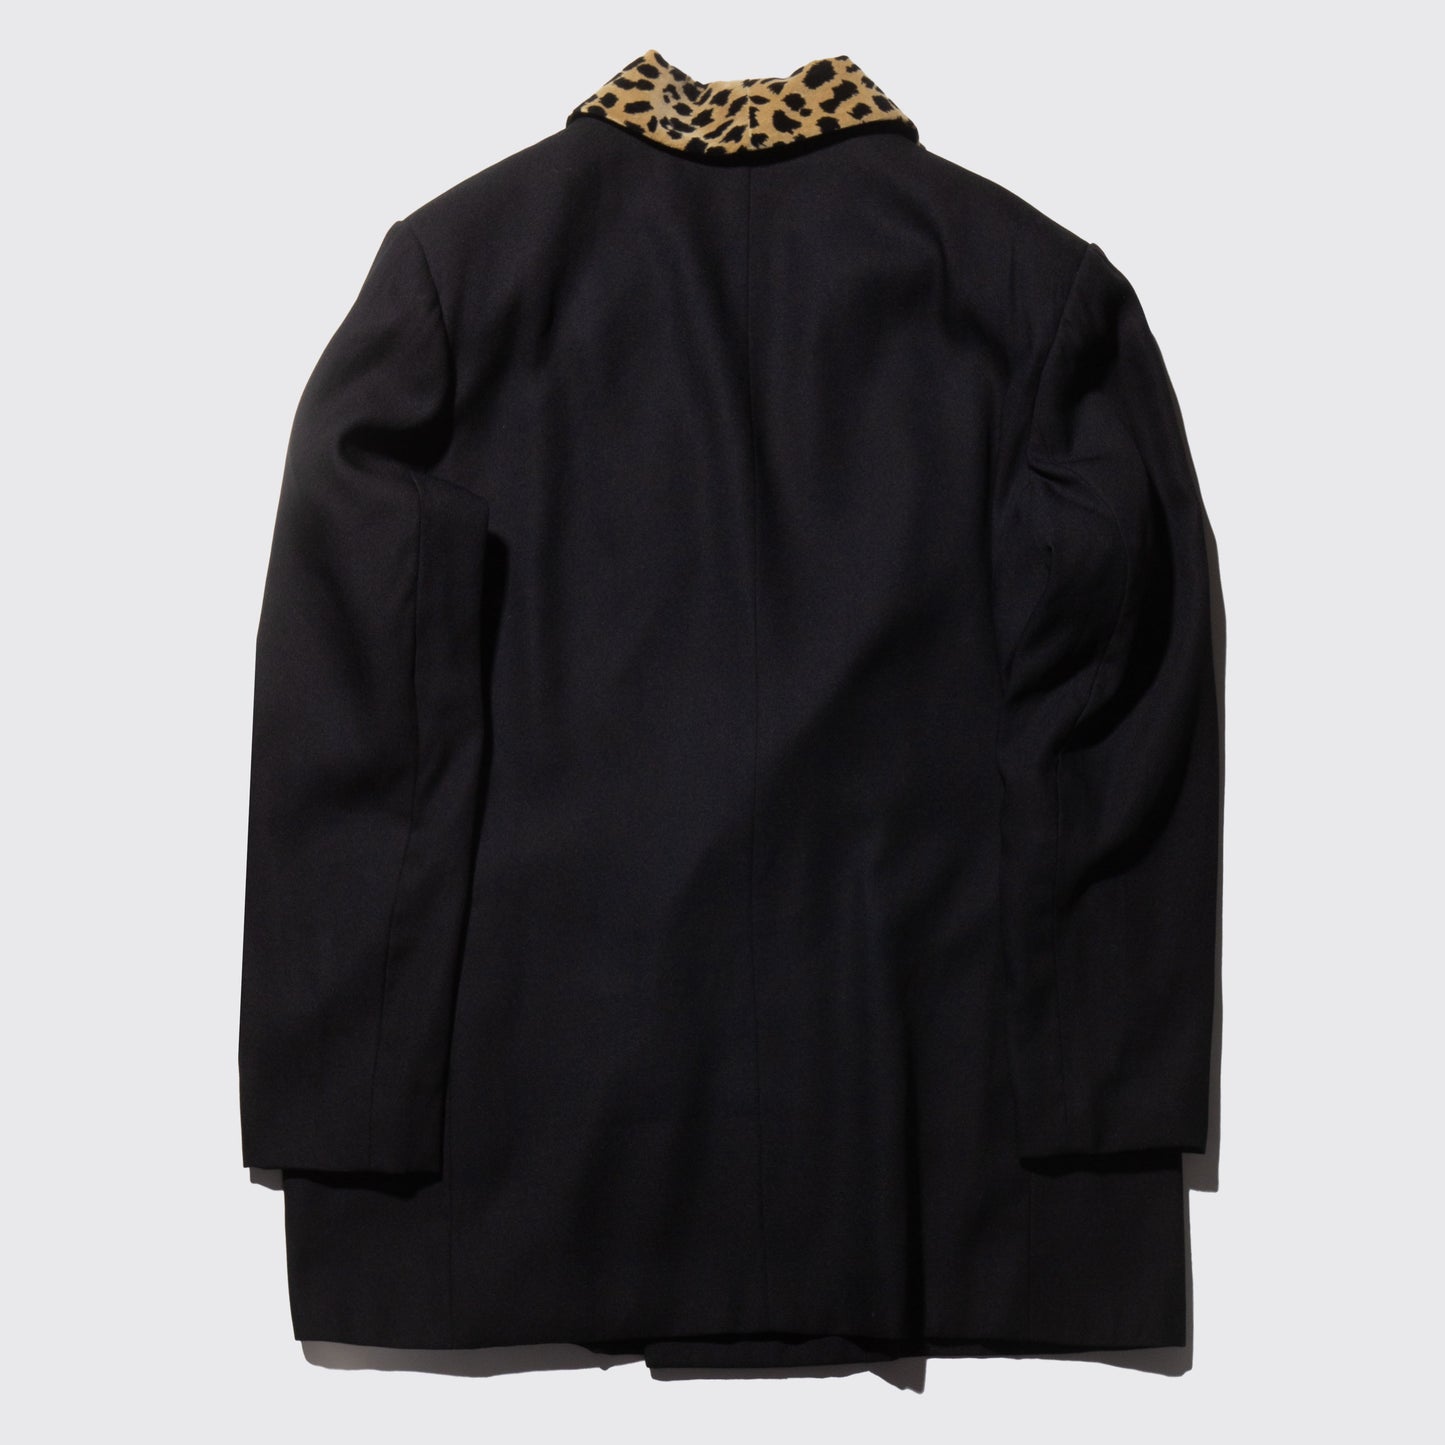 vintage leopard smoking jacket